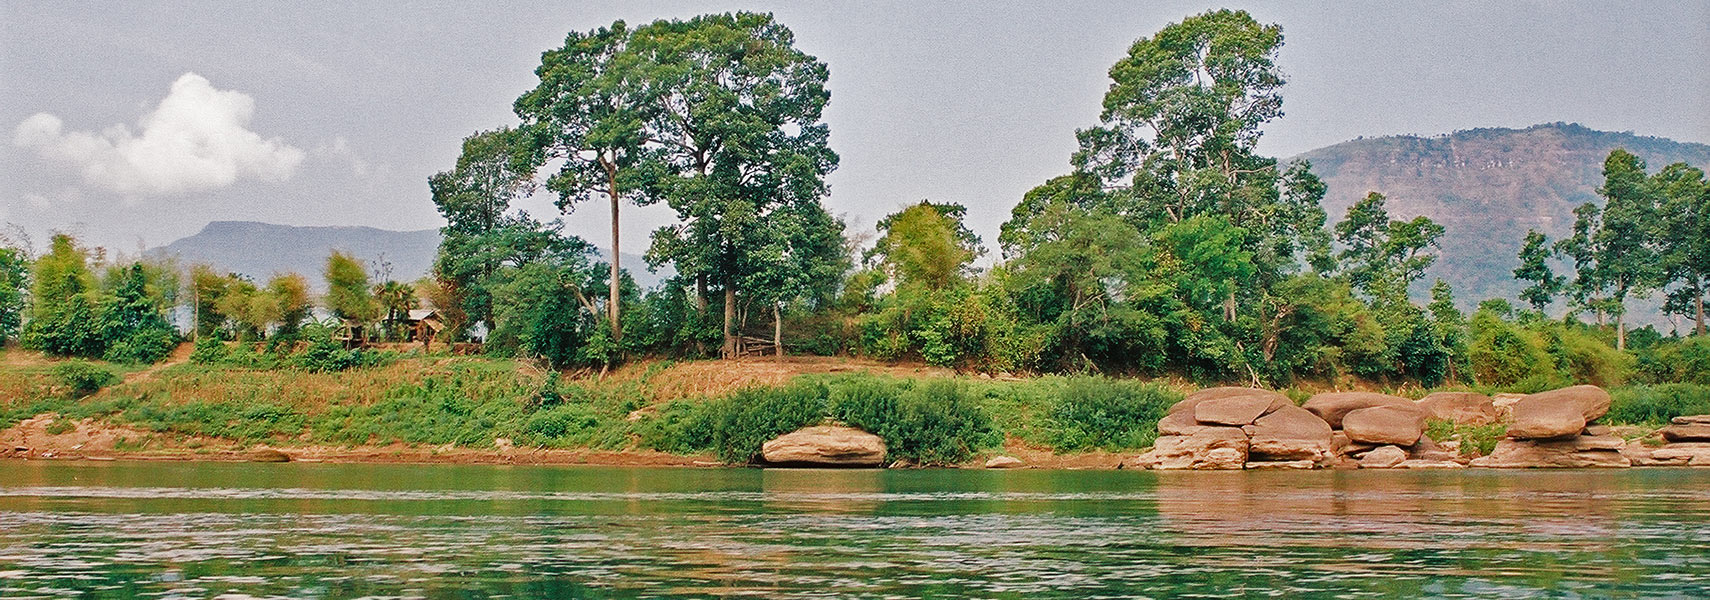 Mekong River, Lao near the city of Pakse